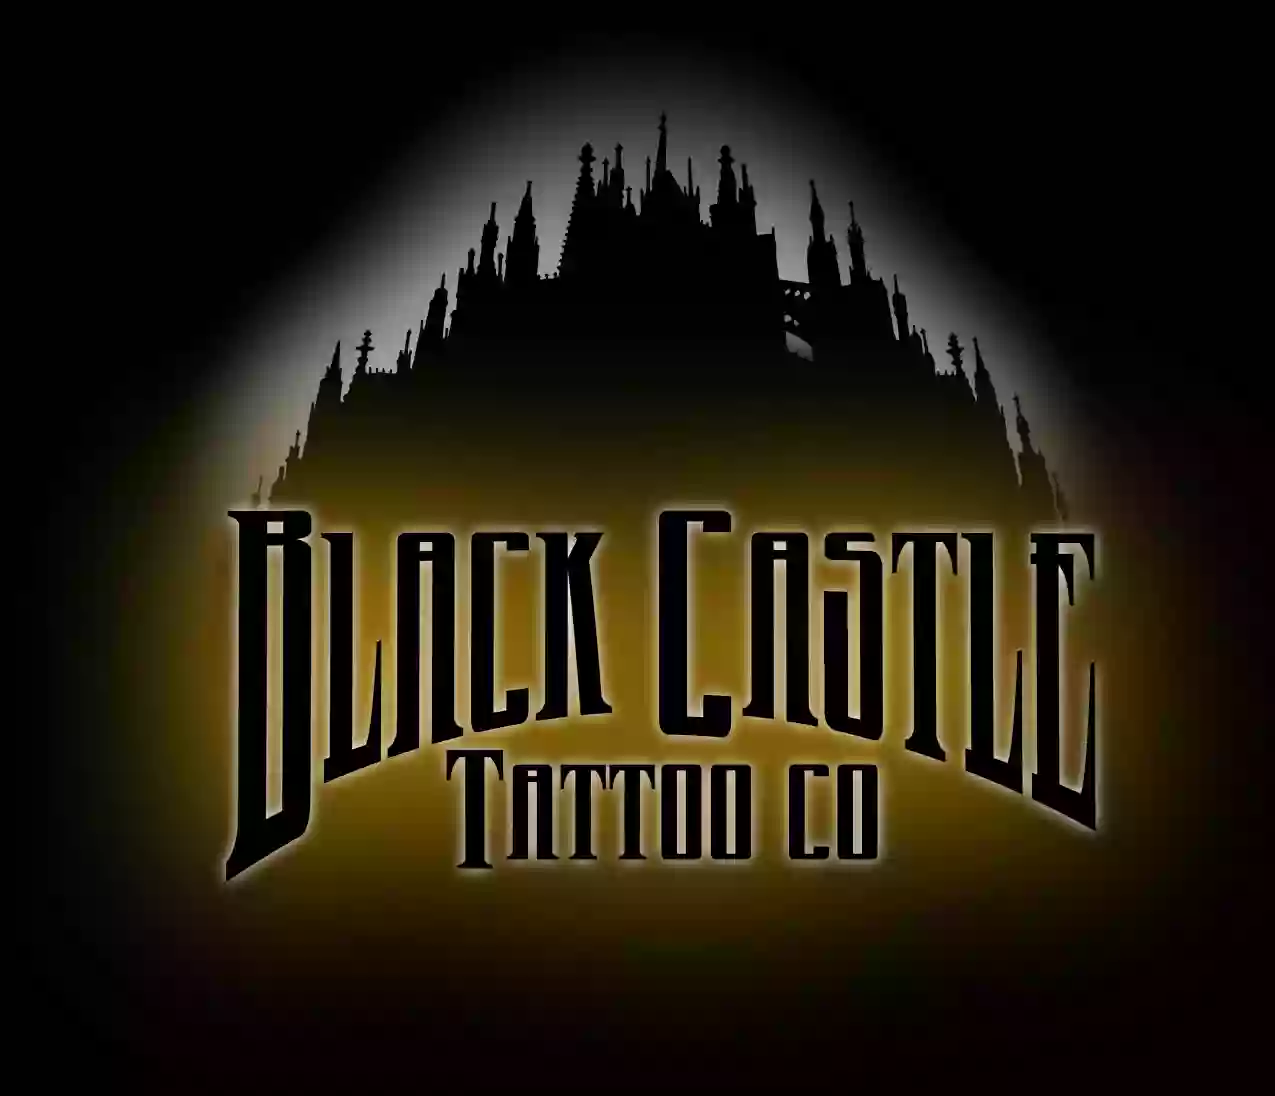 Black Castle Tattoo Company